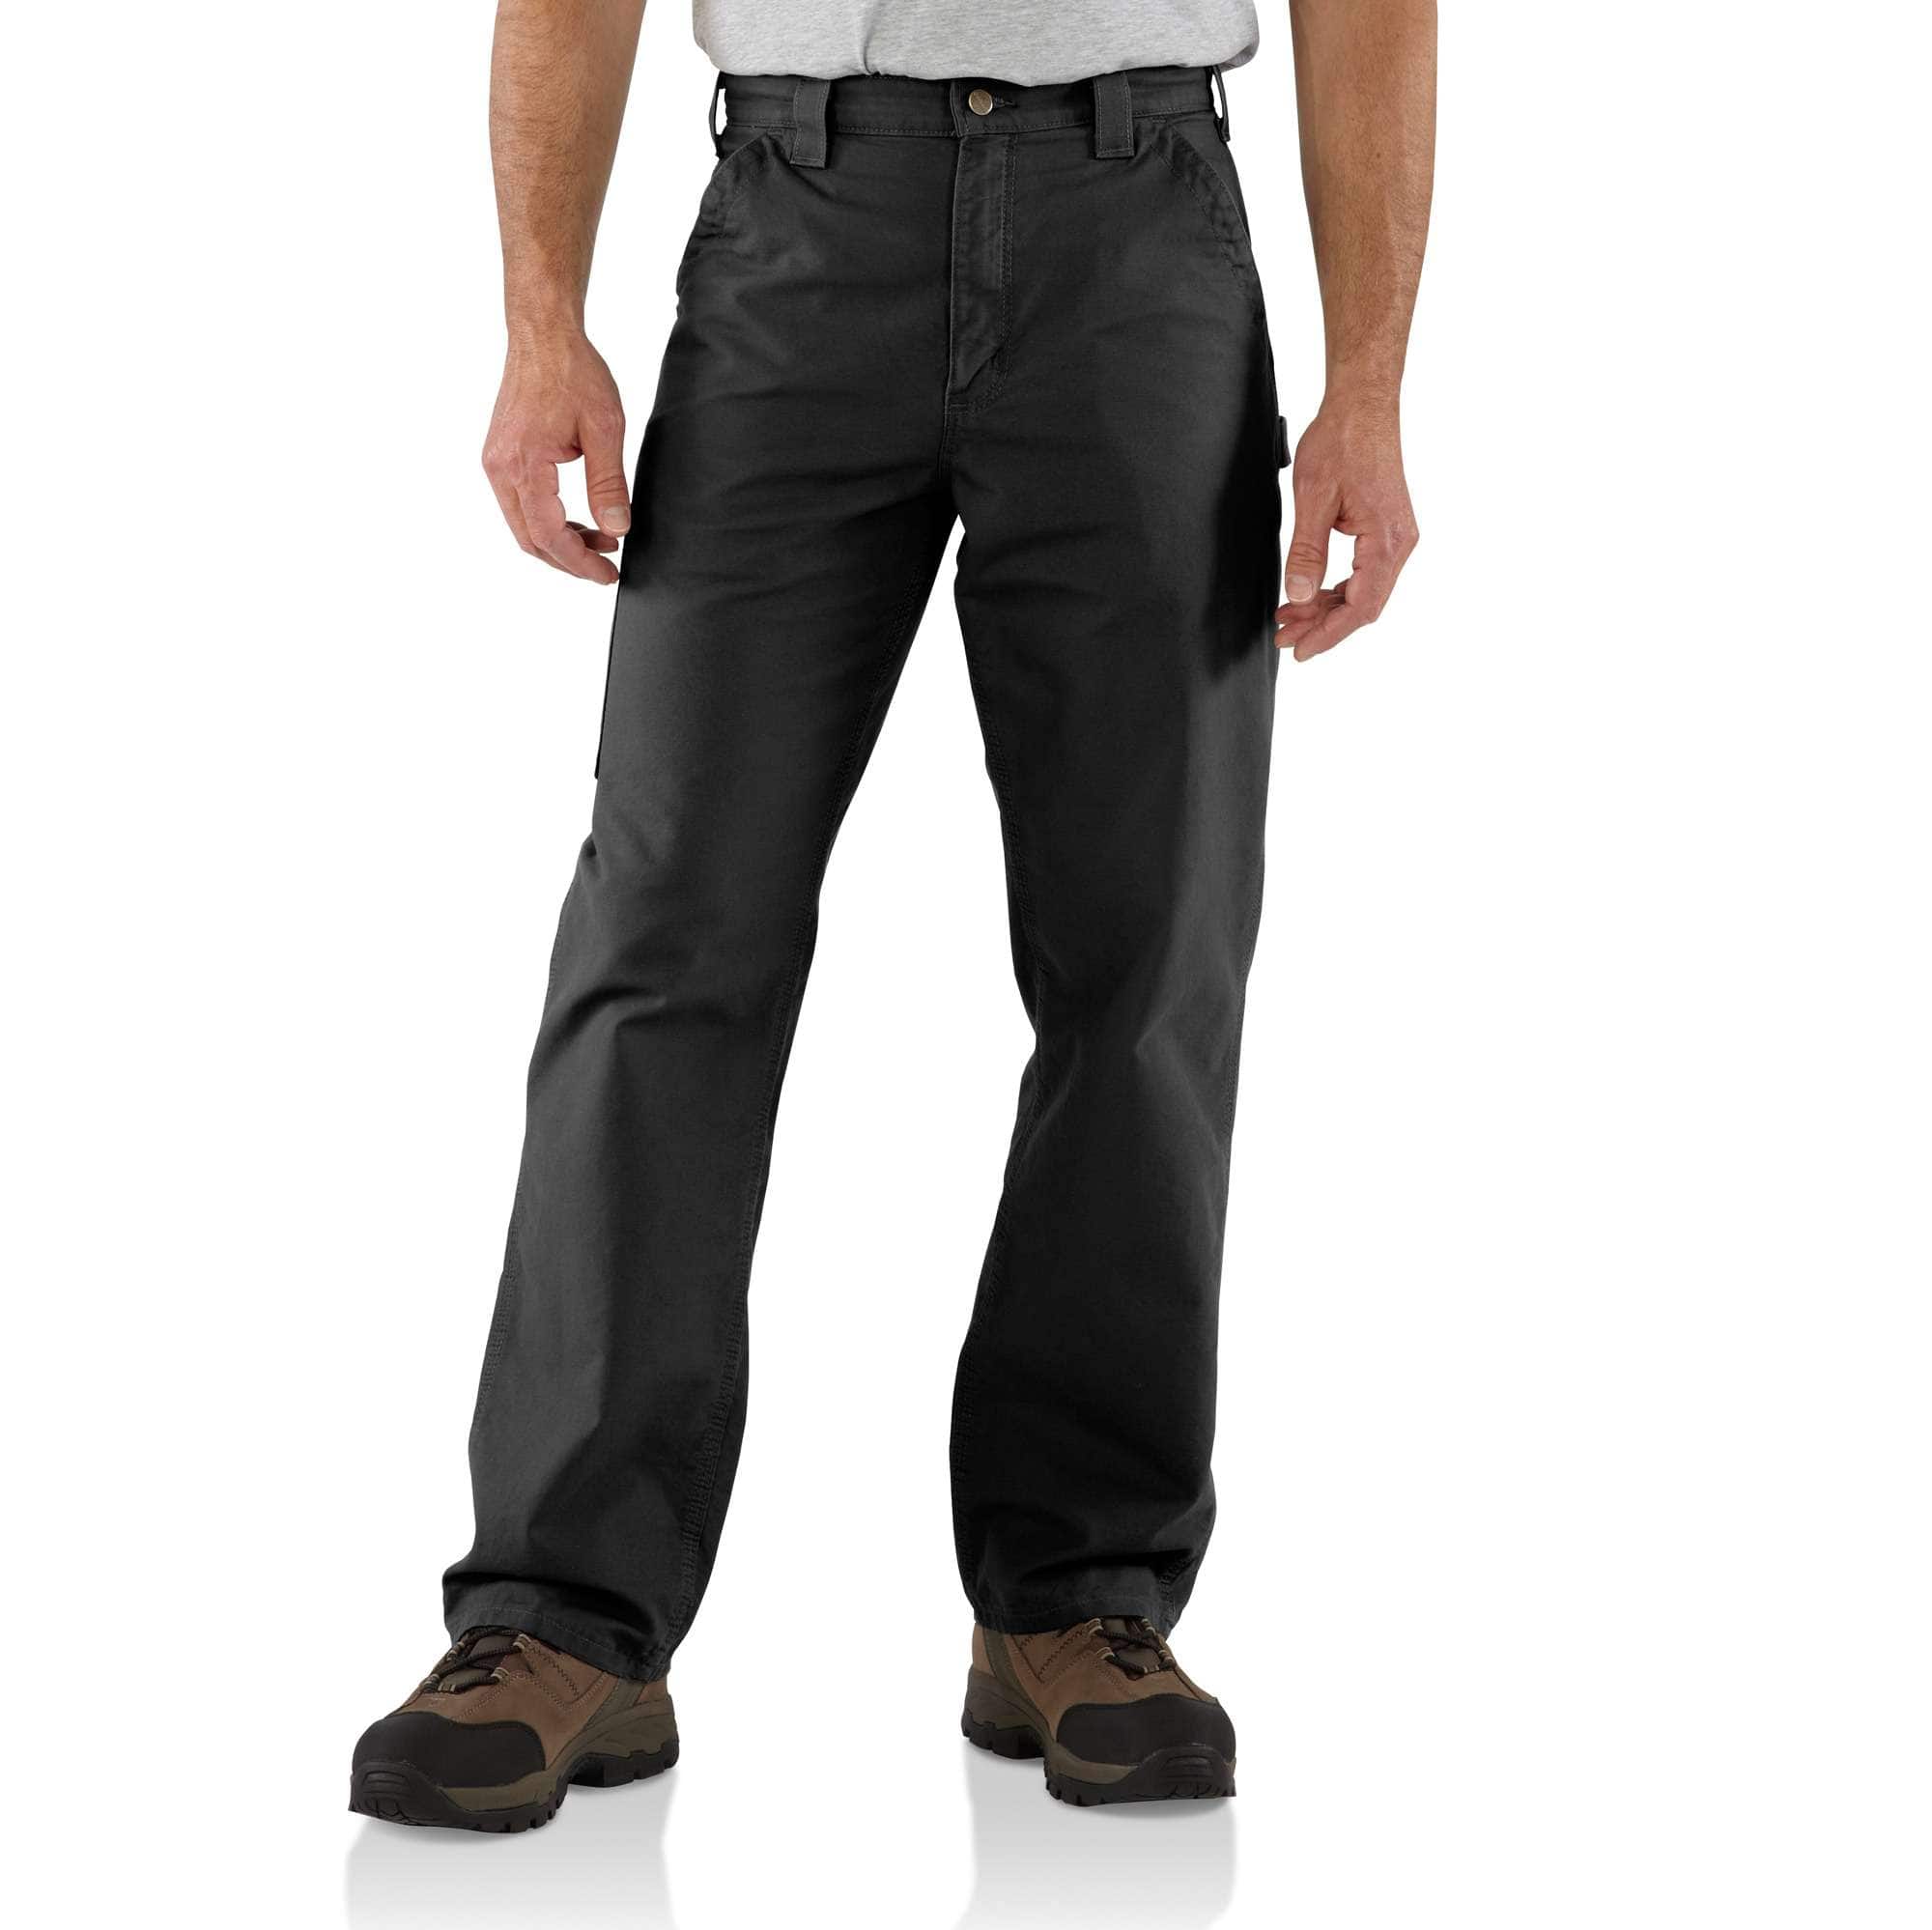 Carhartt Men's Pants Size Chart – Tomlinson Sales Company